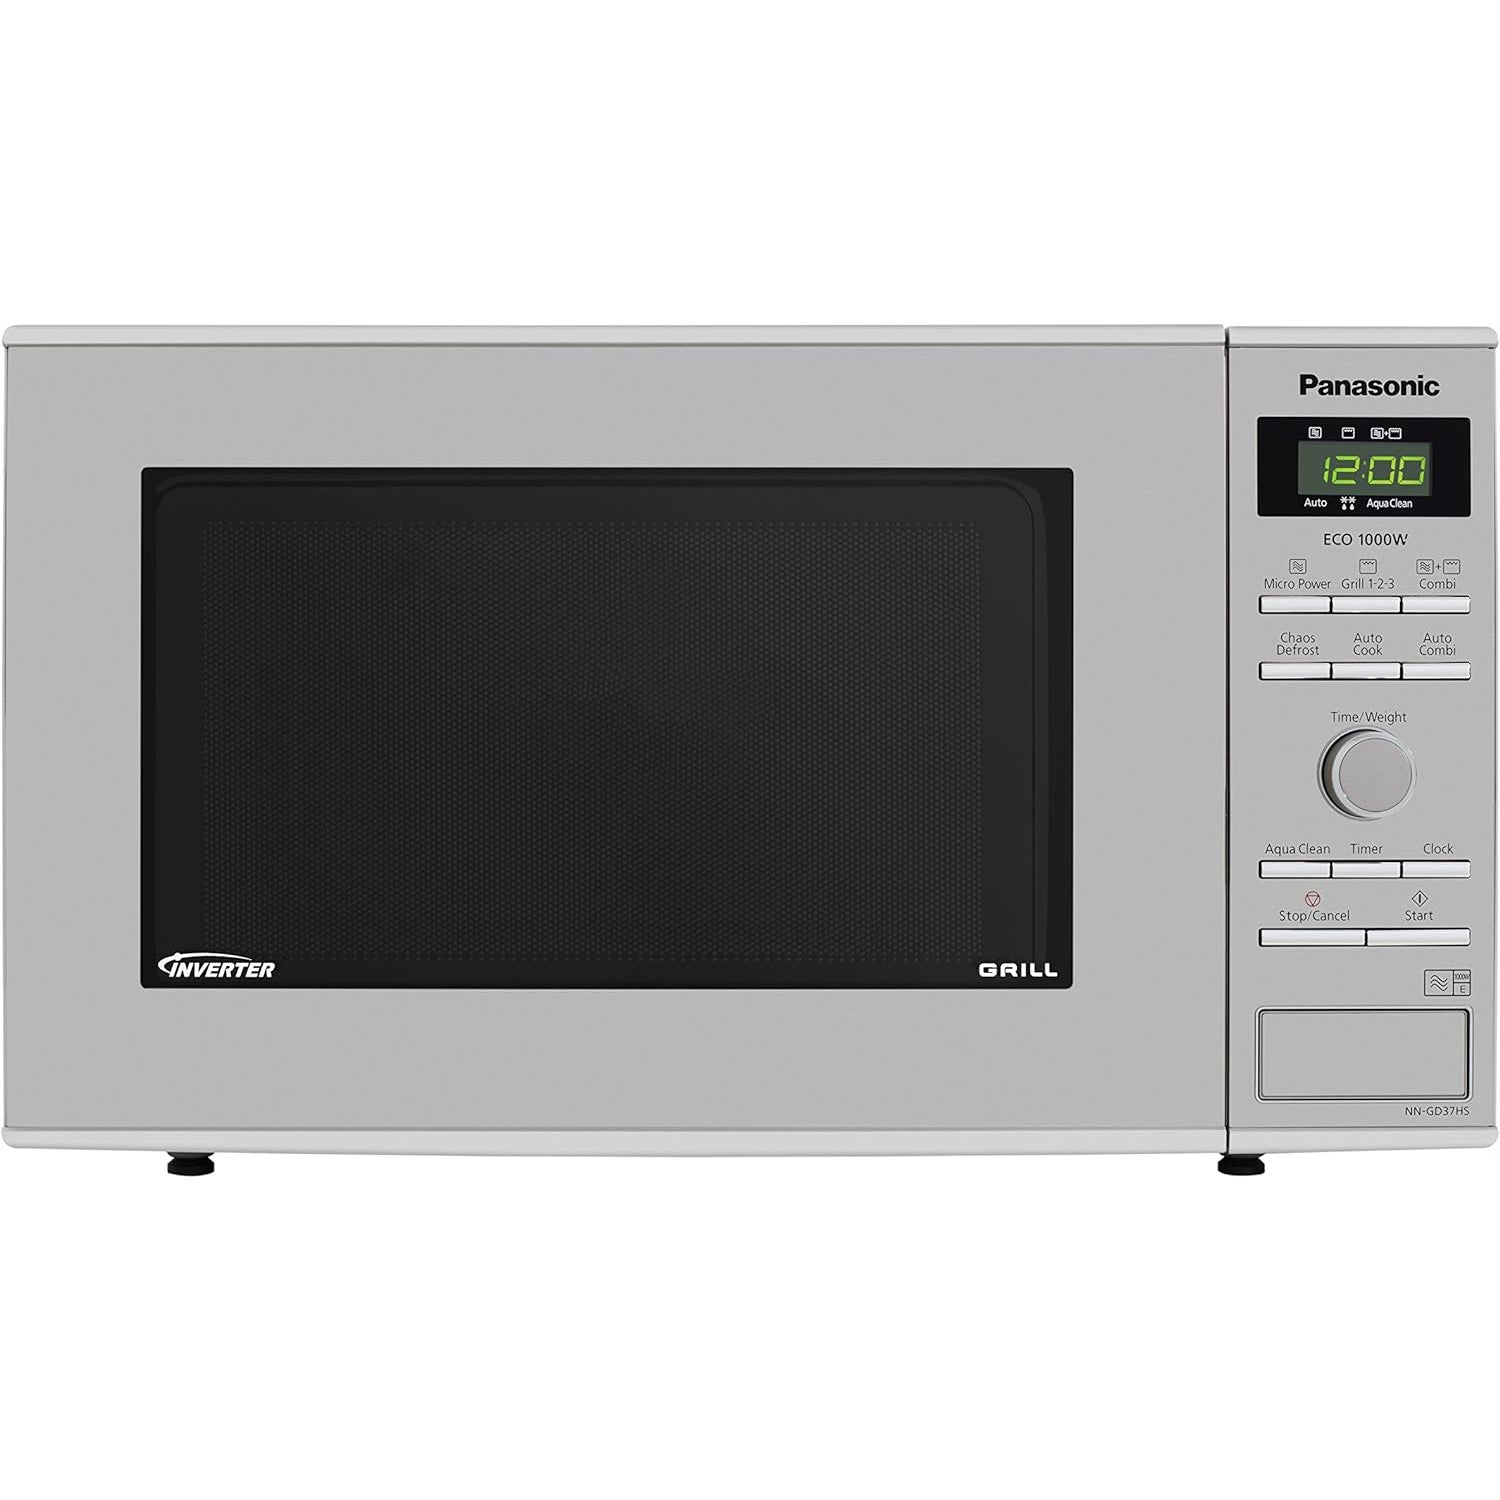 Panasonic NN-GD37HSBPQ Compact Microwave Oven - Silver